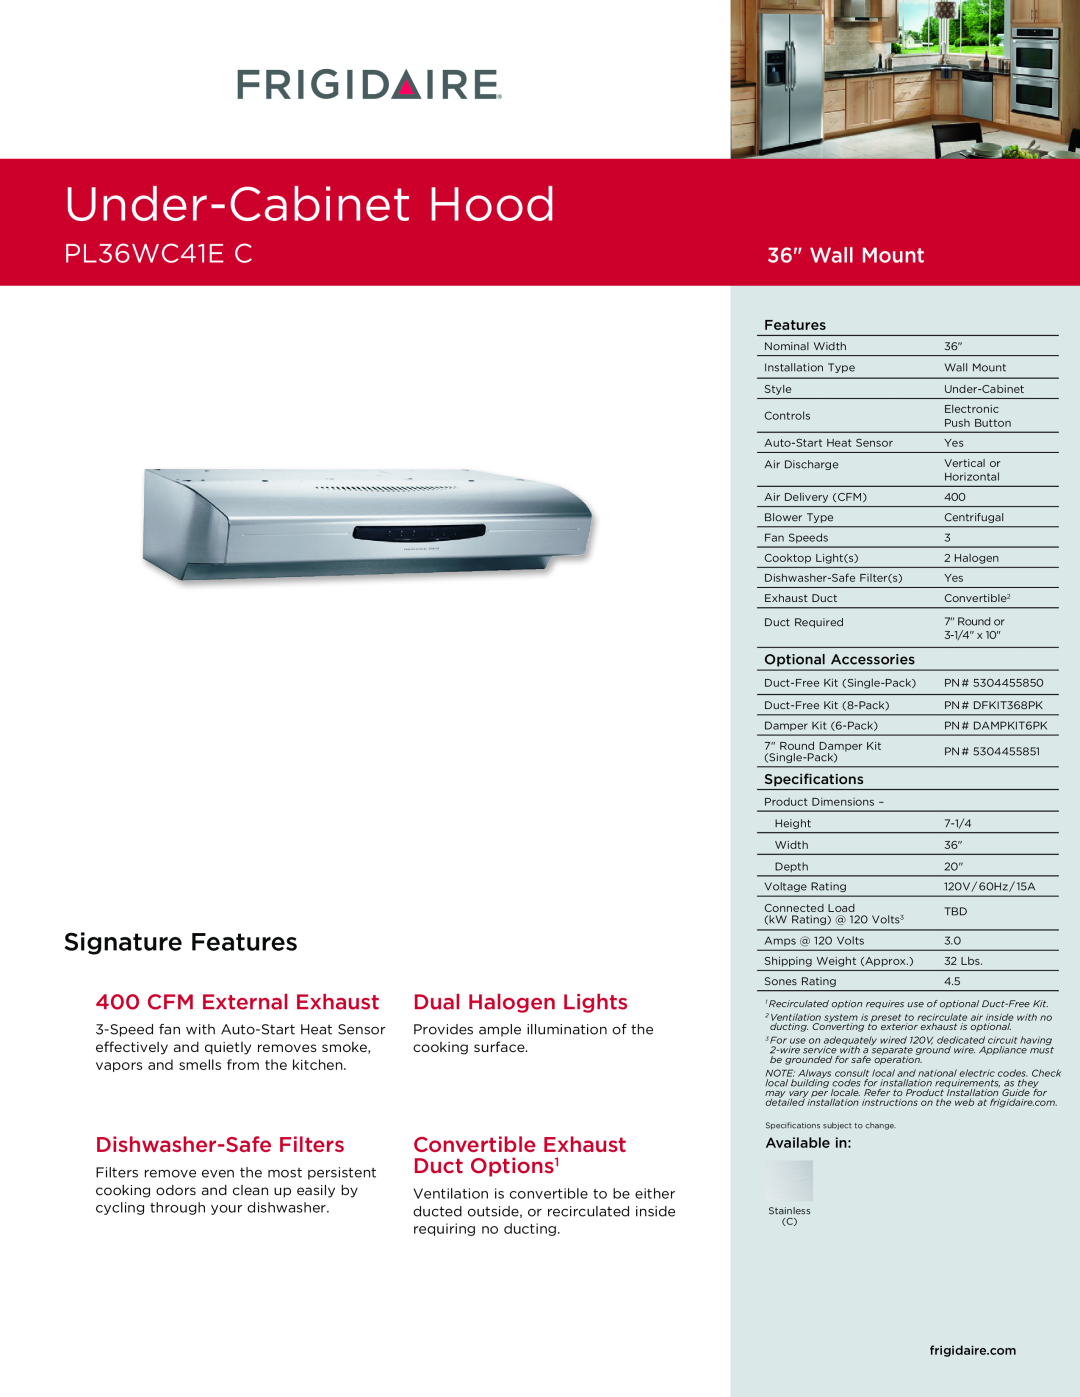 Frigidaire PL36WC41EC installation instructions UnderDrop-In-CabinetCooktopHood, PL36WC41EFPEC3085K SC, Signature Features 